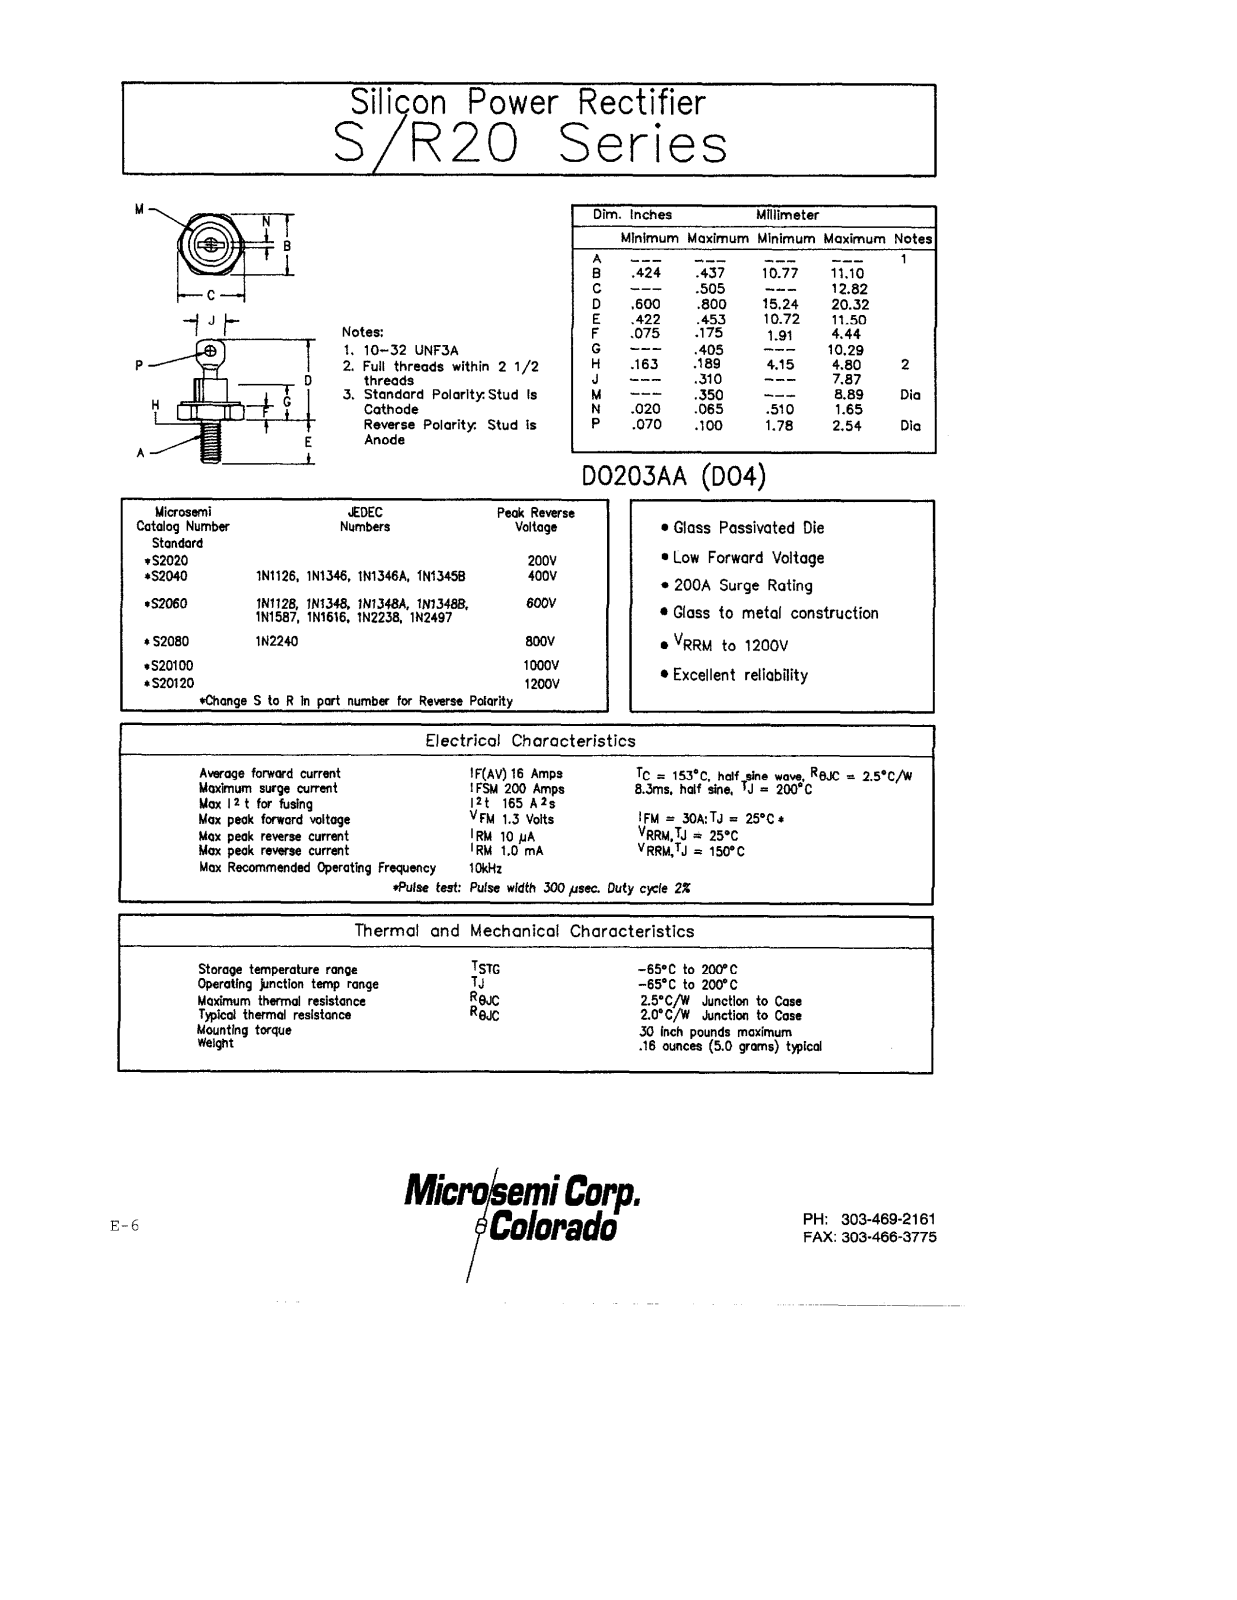 Microsemi Corporation R20100, R2040, R2060, R2080, S20100 Datasheet